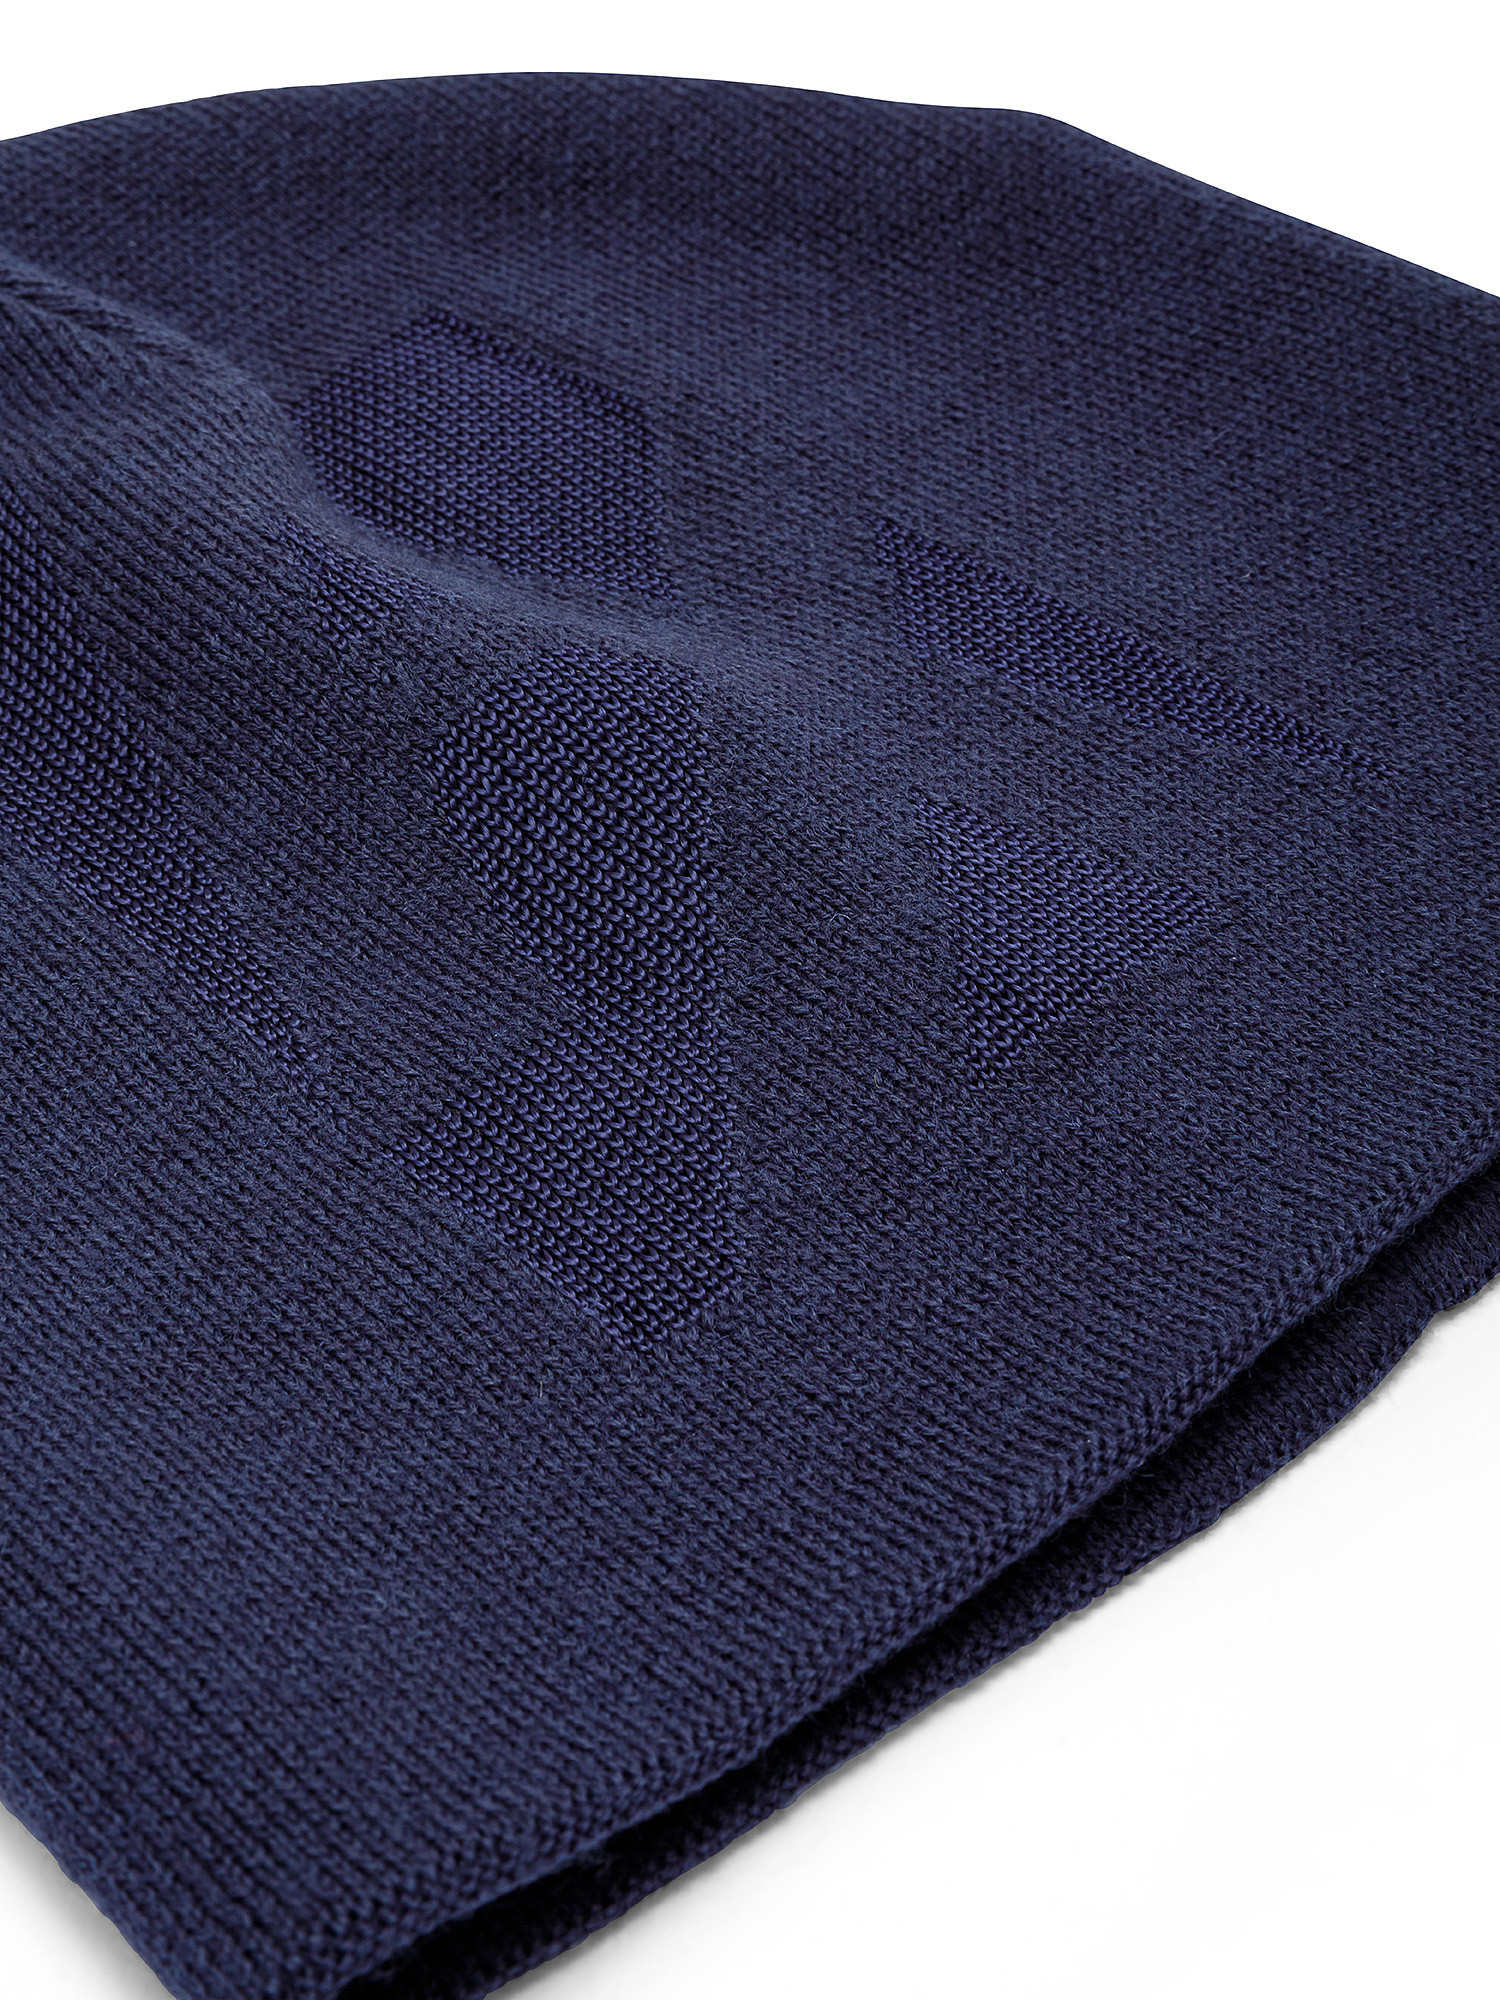 Armani Exchange - Wool blend beanie hat with logo, Dark Blue, large image number 1